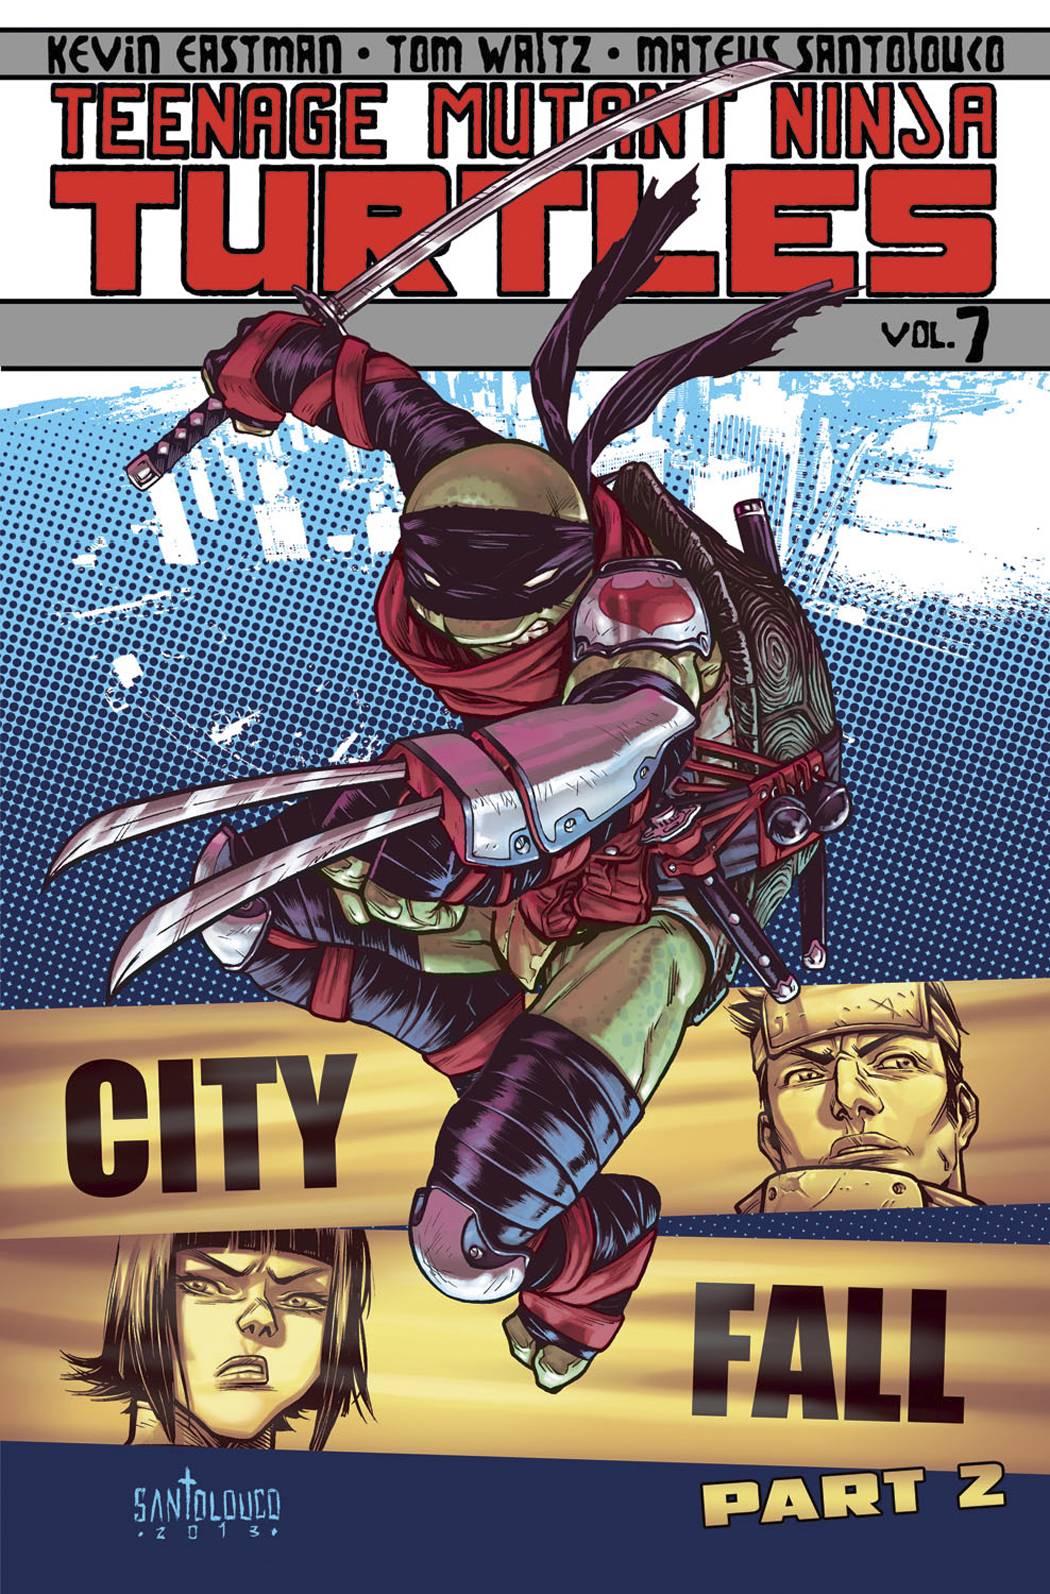 Teenage Mutant Ninja Turtles Ongoing Graphic Novel Volume 7 City Fall Part 2